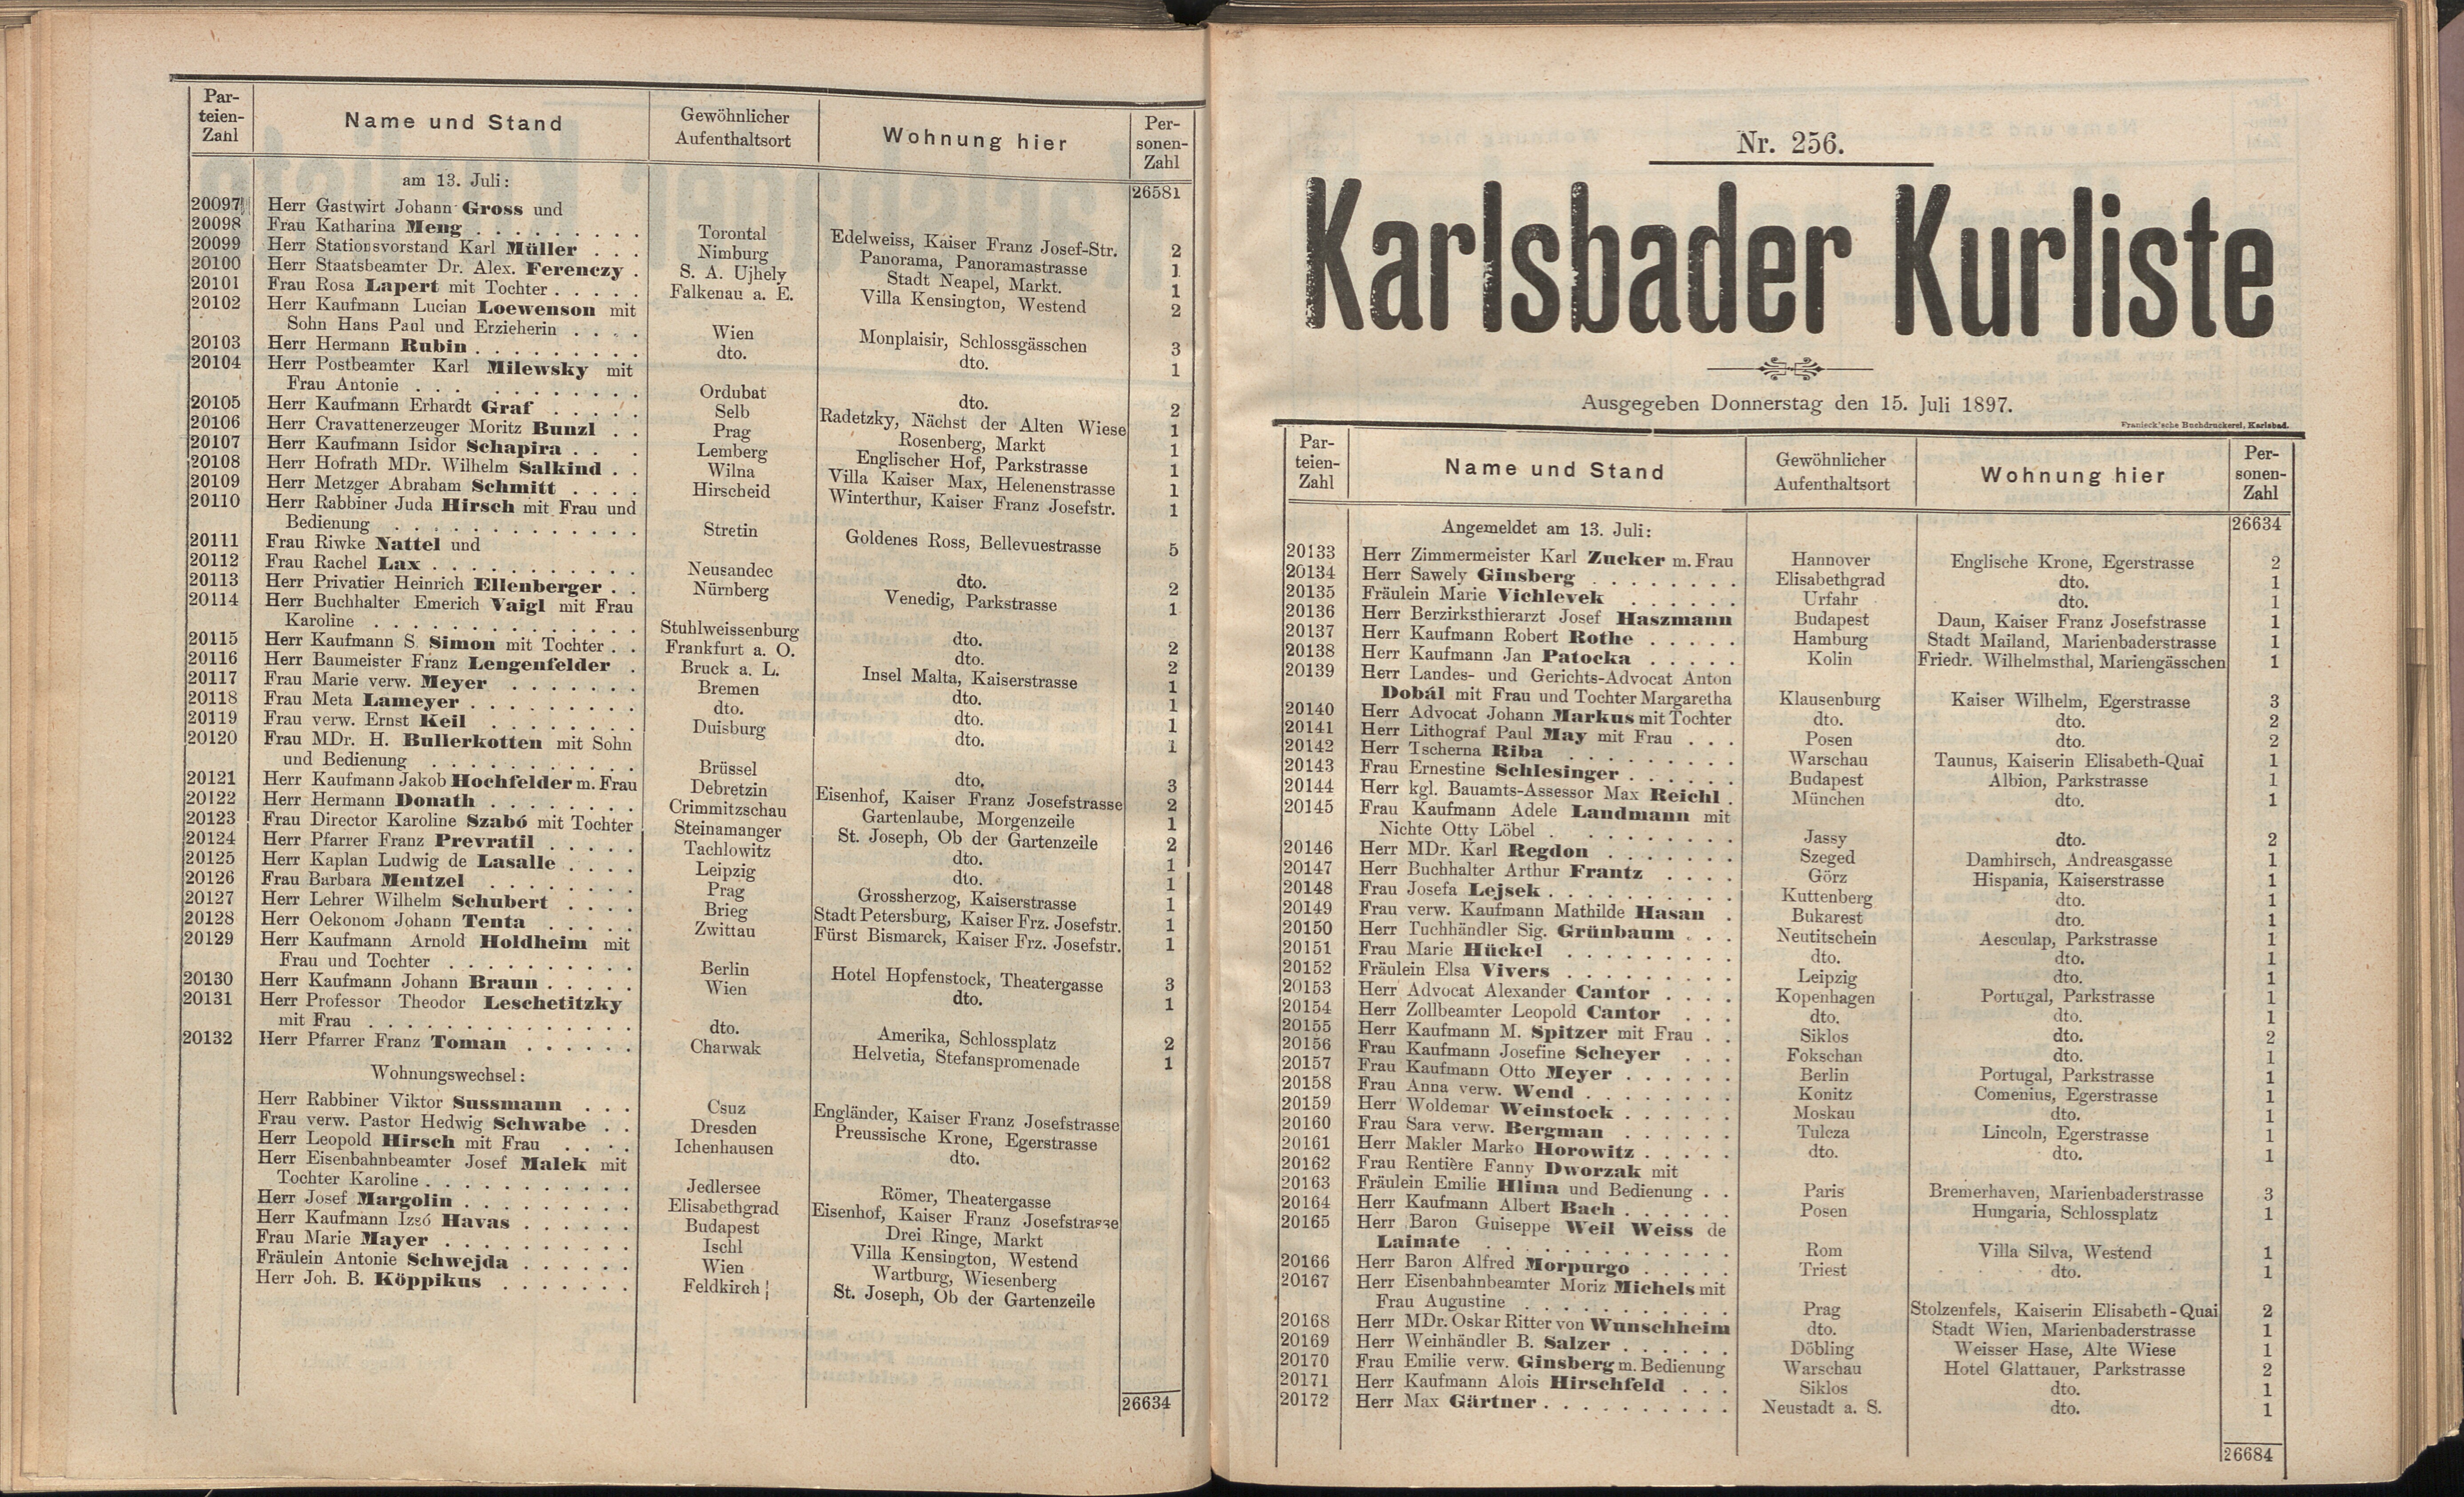 275. soap-kv_knihovna_karlsbader-kurliste-1897_2760